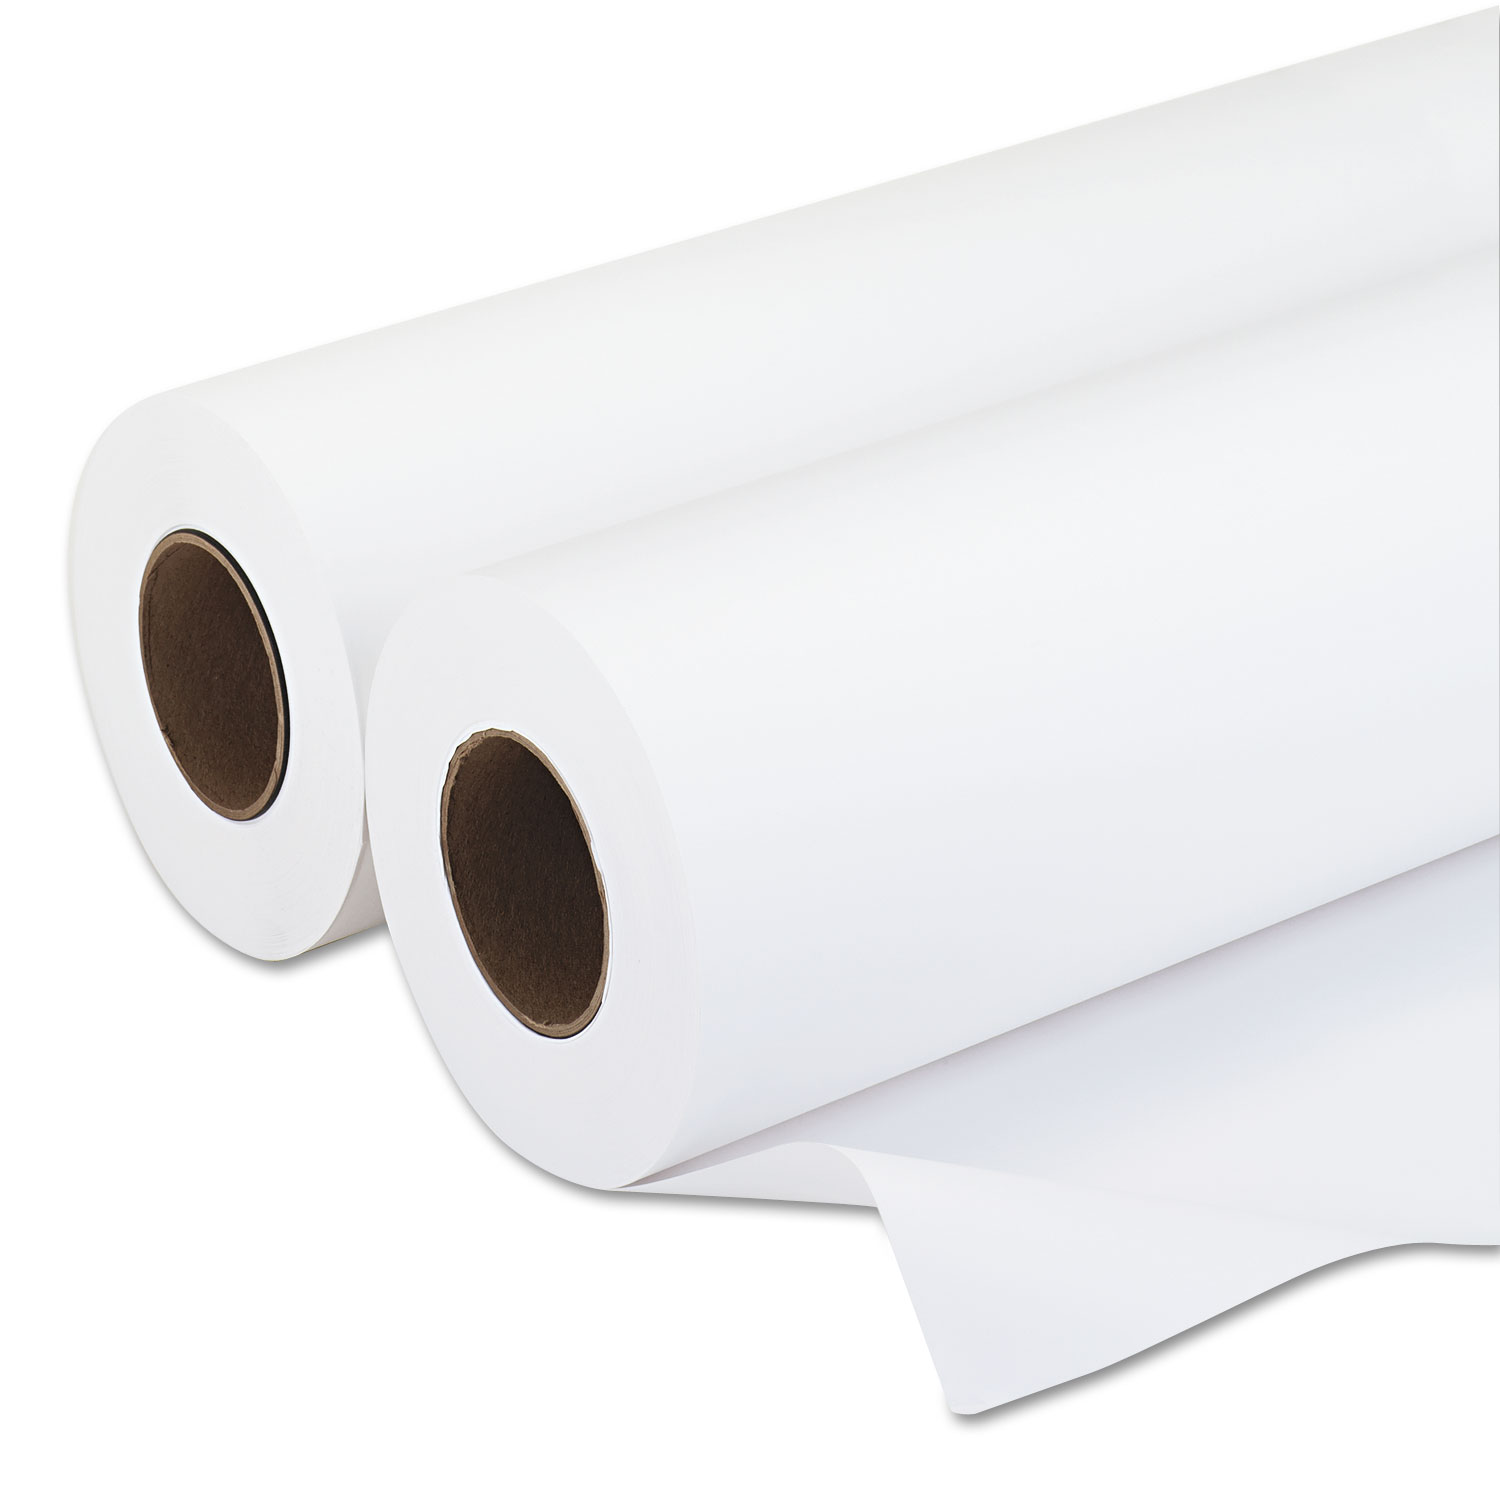  Iconex 9118 Amerigo Wide-Format Paper, 3 Core, 20 lb, 18 x 500 ft, Smooth White, 2/Pack (ICX90750200) 